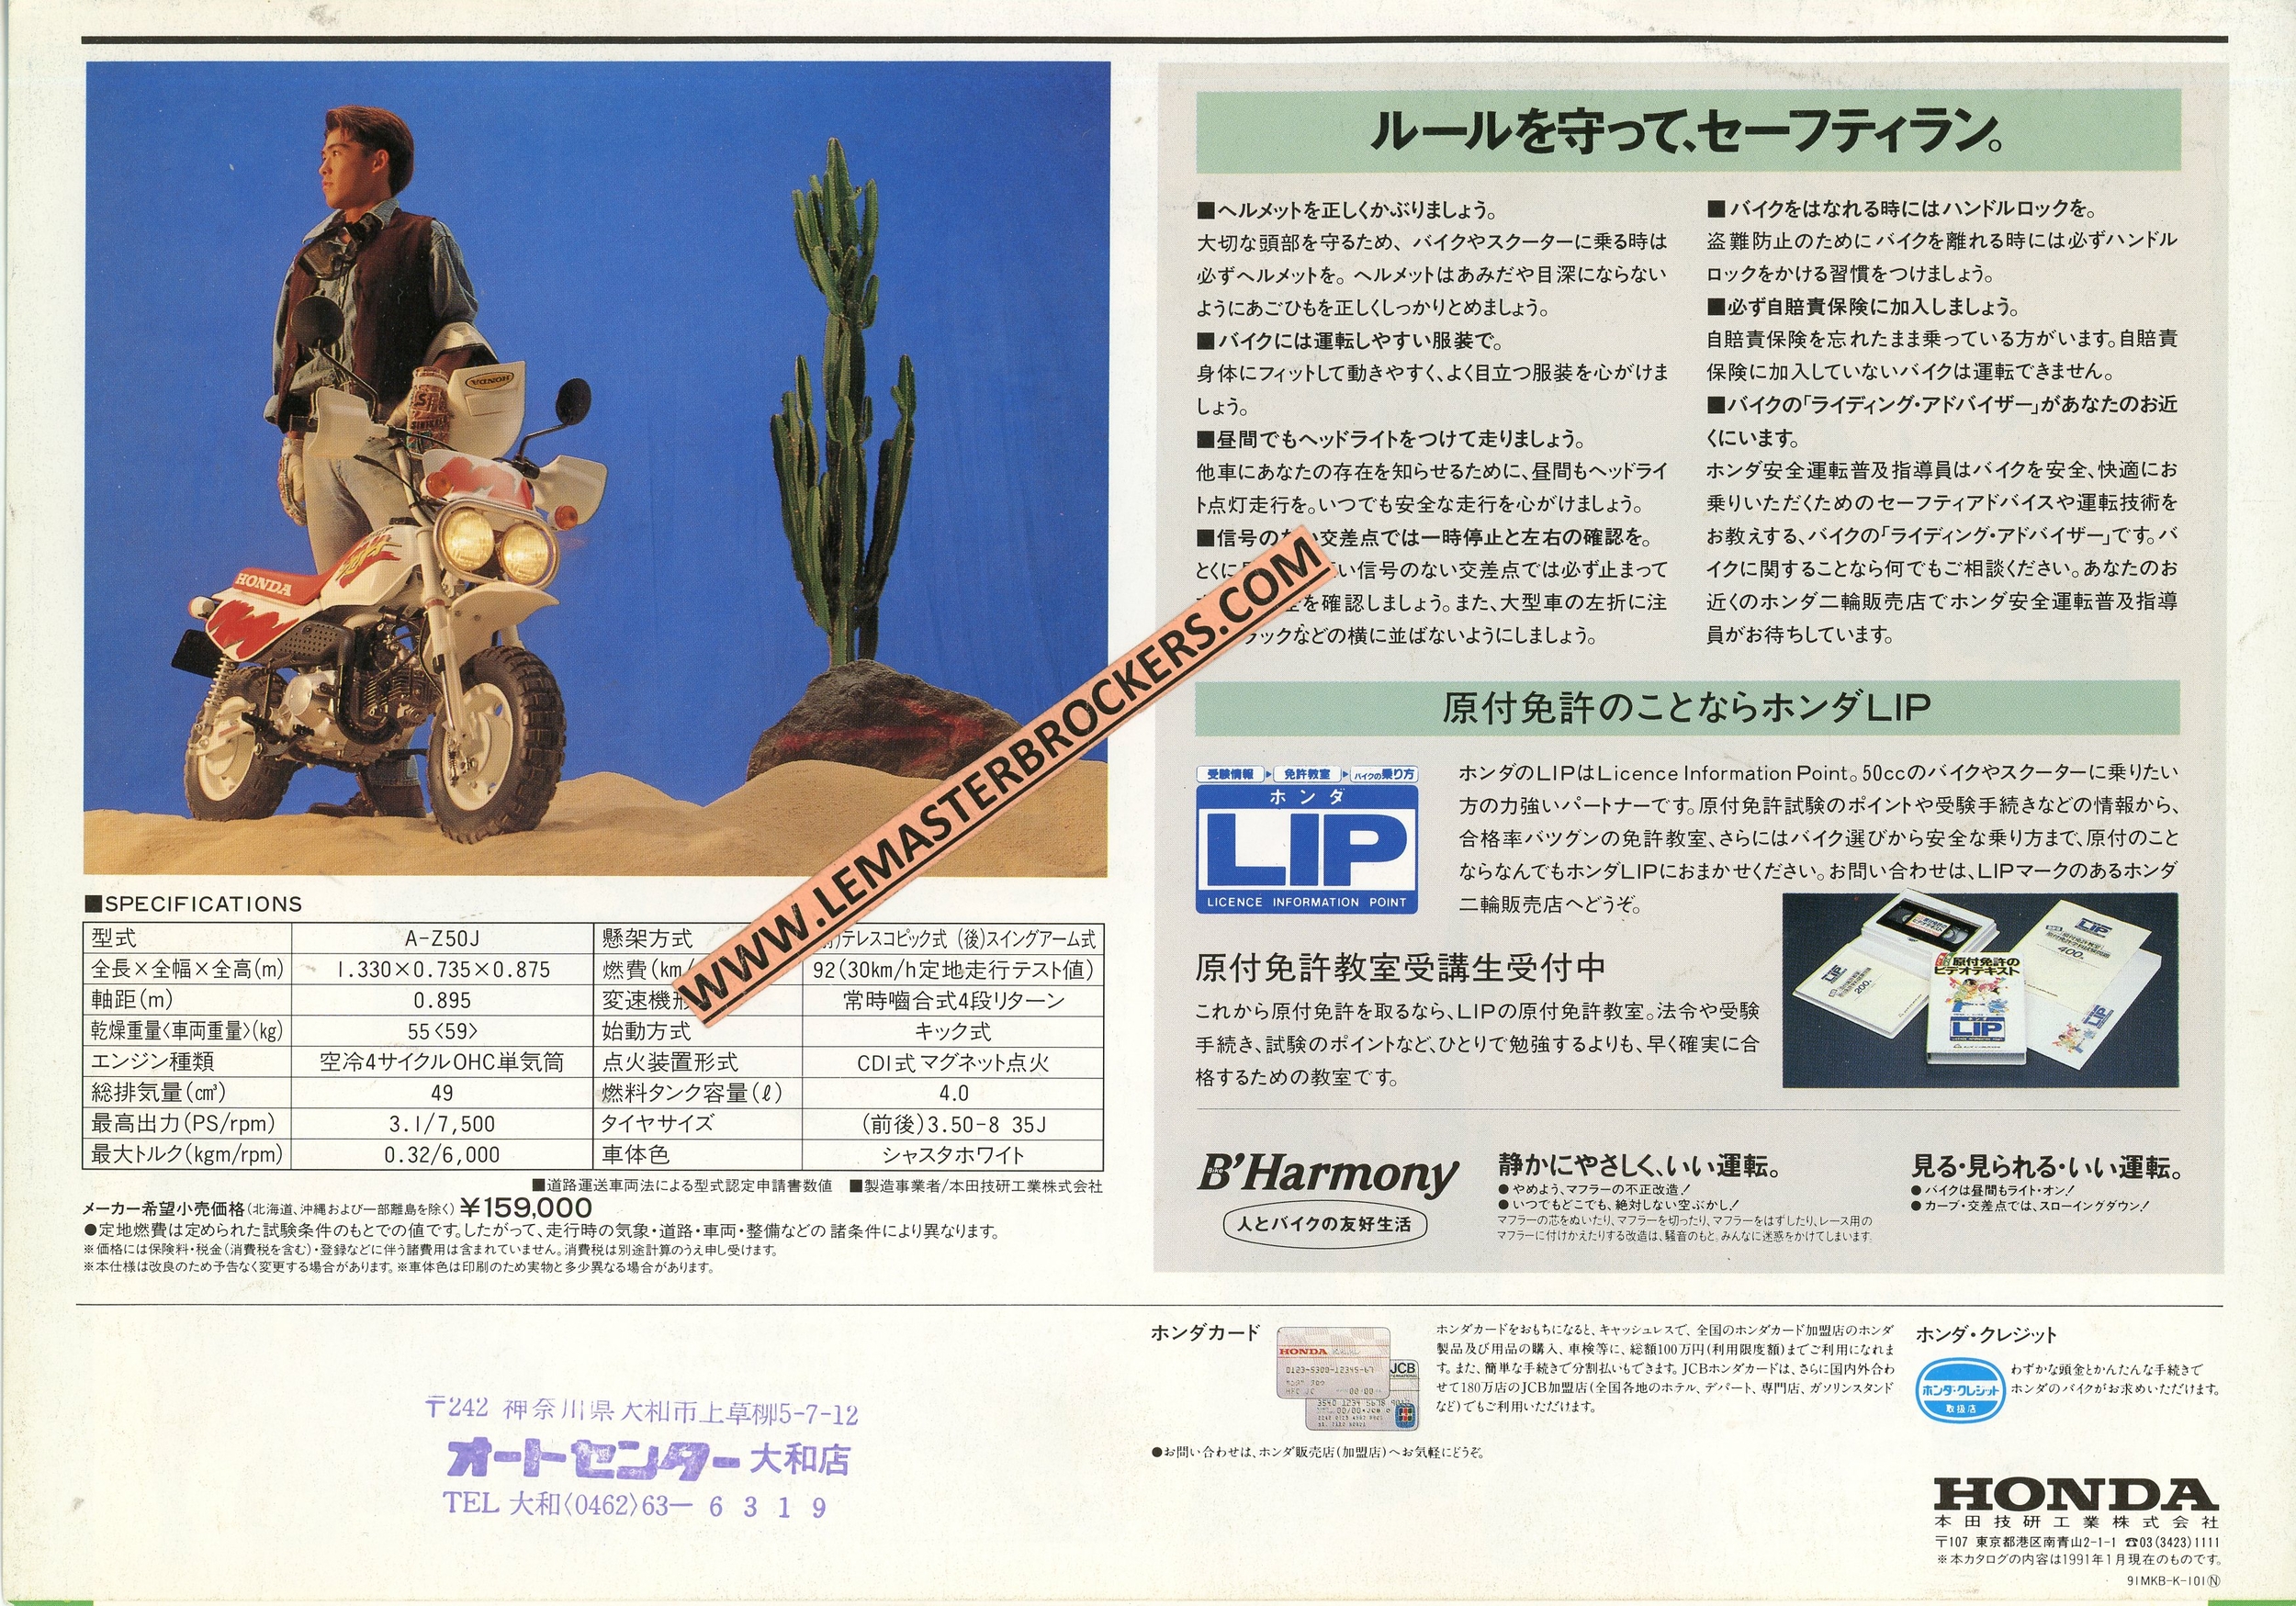 BROCHURE-MOTO-HONDA-MONKEY-BAJA-1991-JAPONAIS-LEMASTERBROCKERS